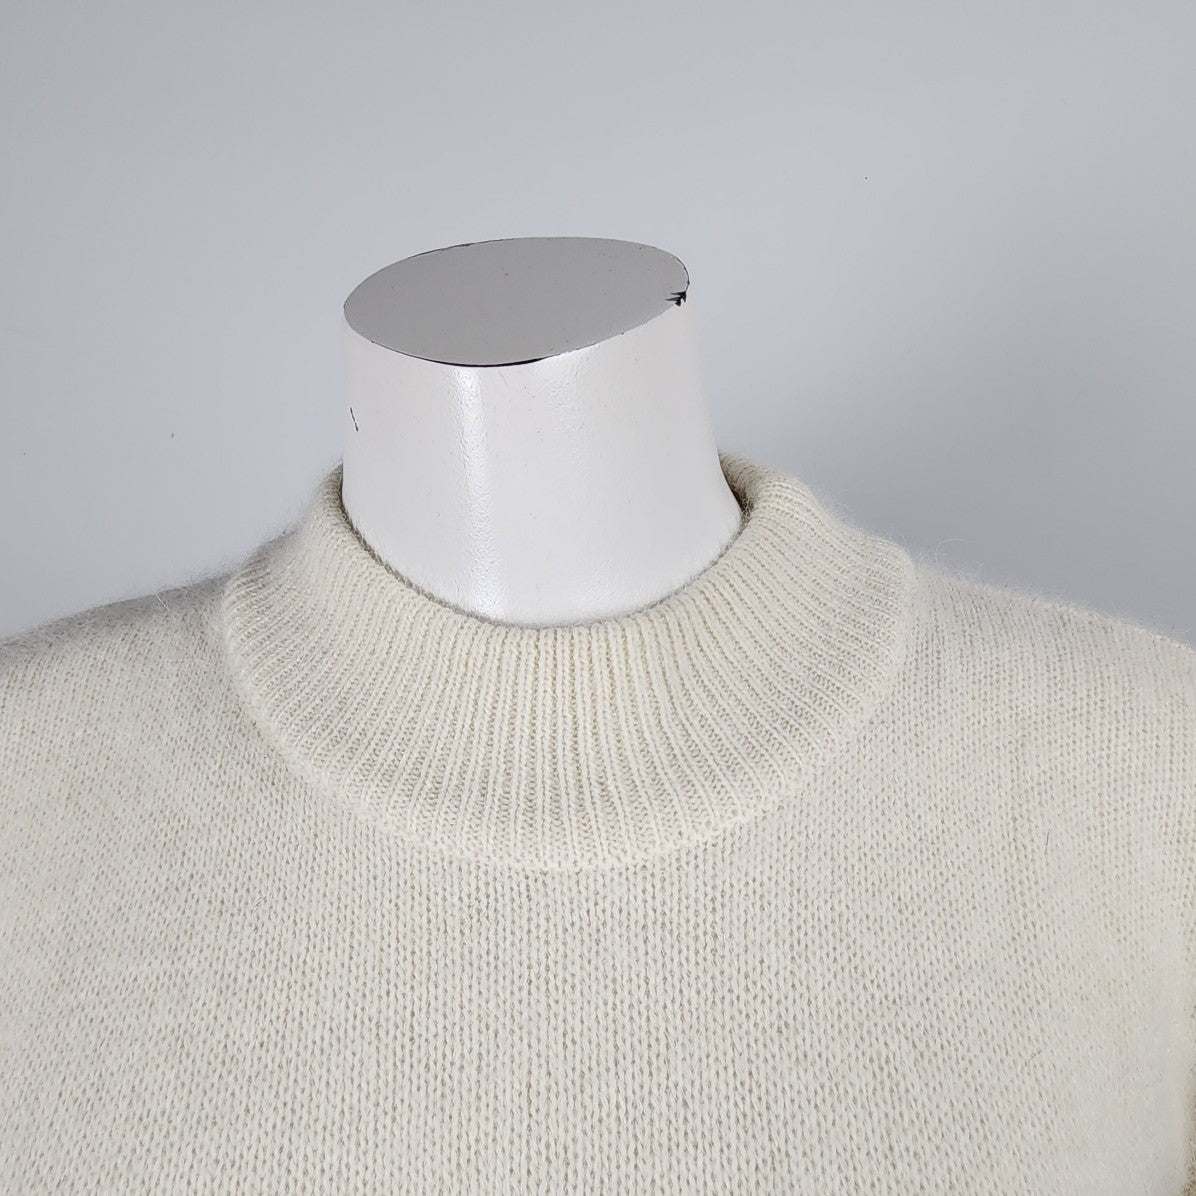 Vintage Soft Knit Cream Turtle Neck Sweater Size S